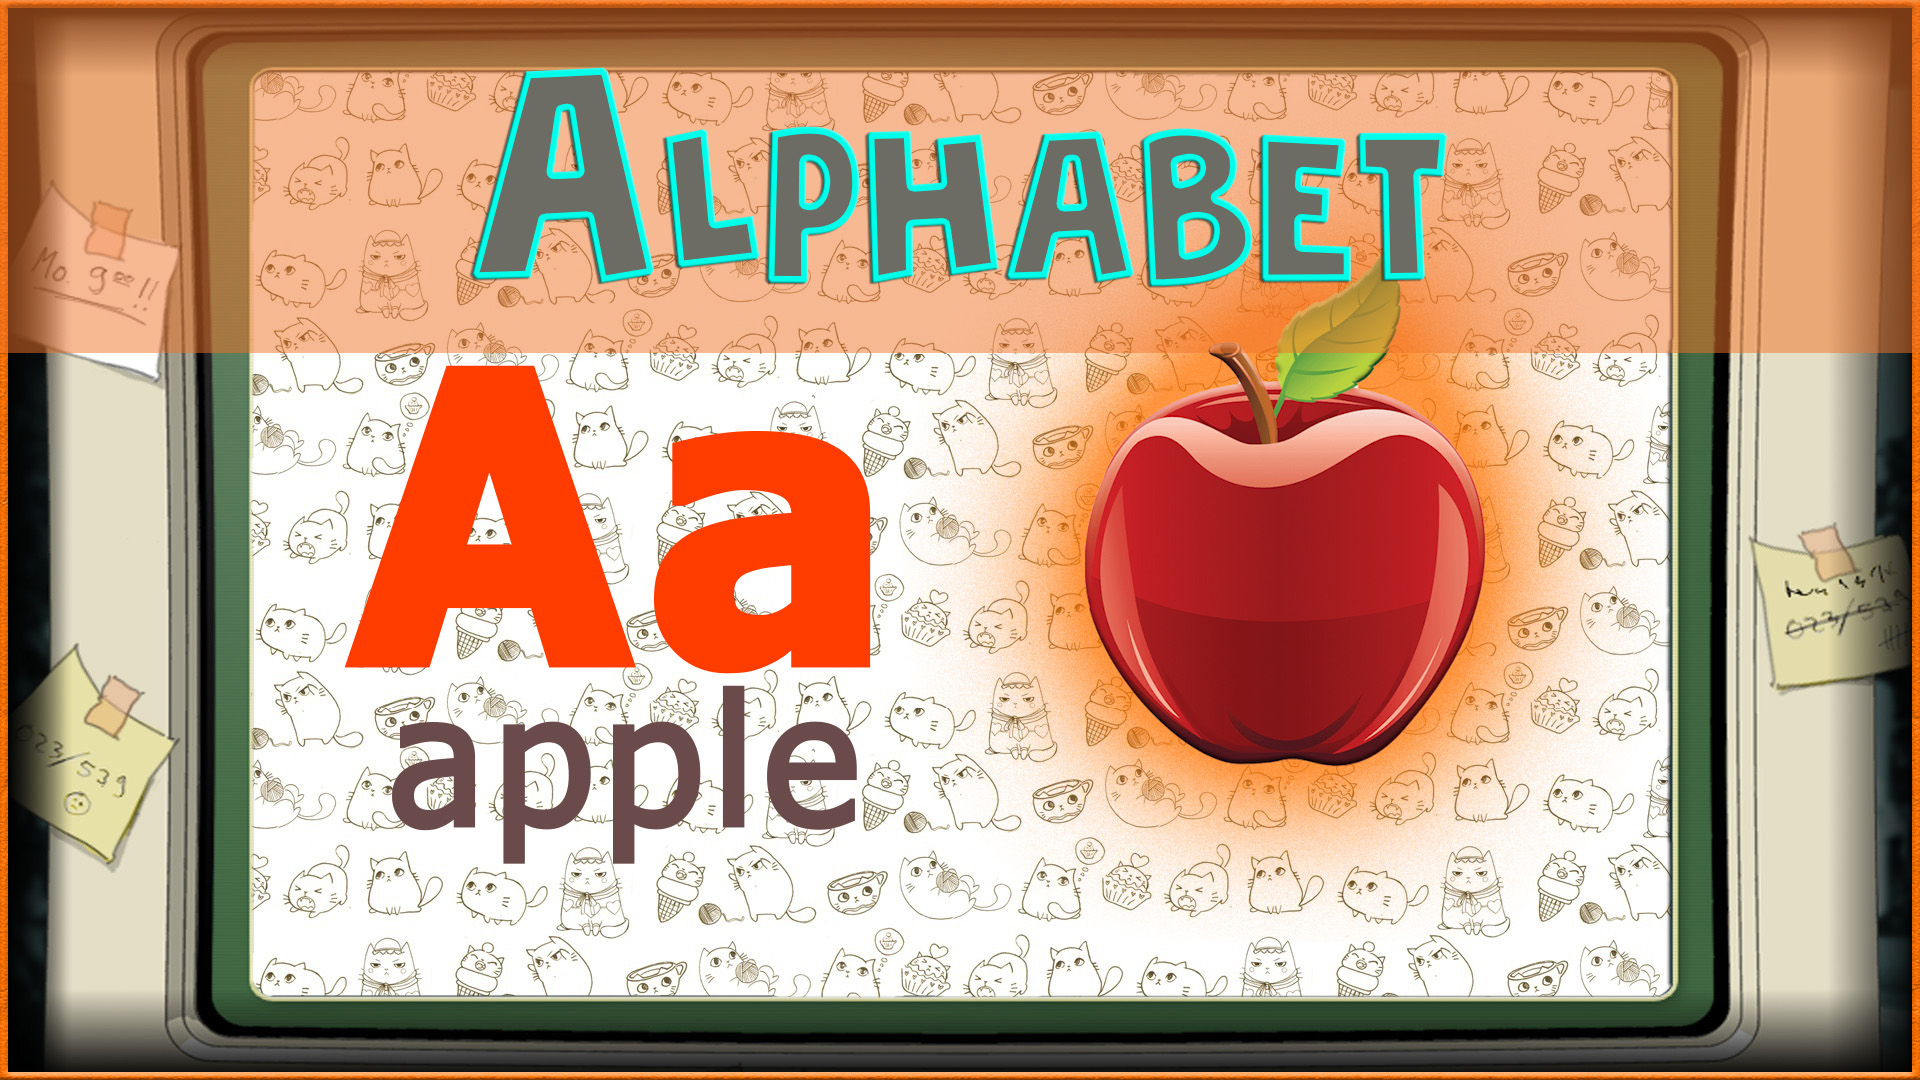 Alphabet - Learning English Words. Алфавит - Учим Английские слова